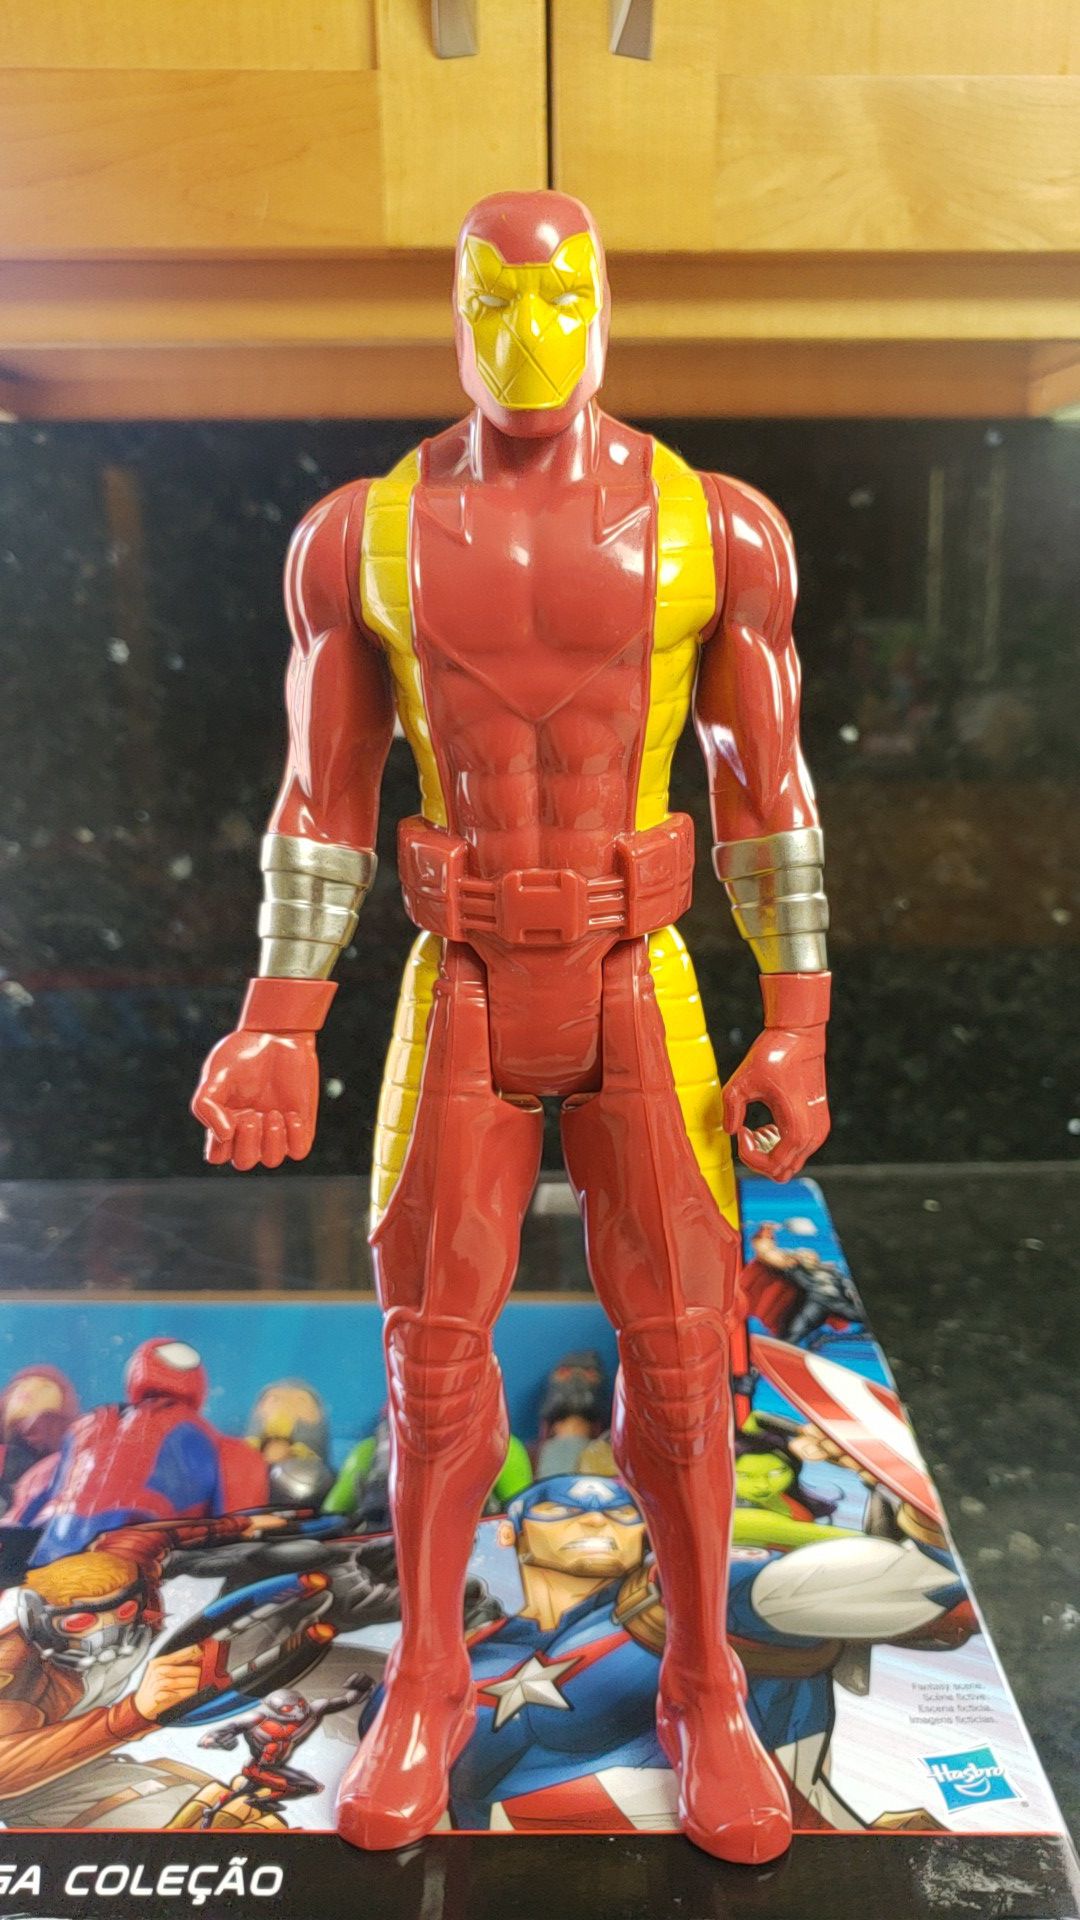 12" Marvel action figure $6